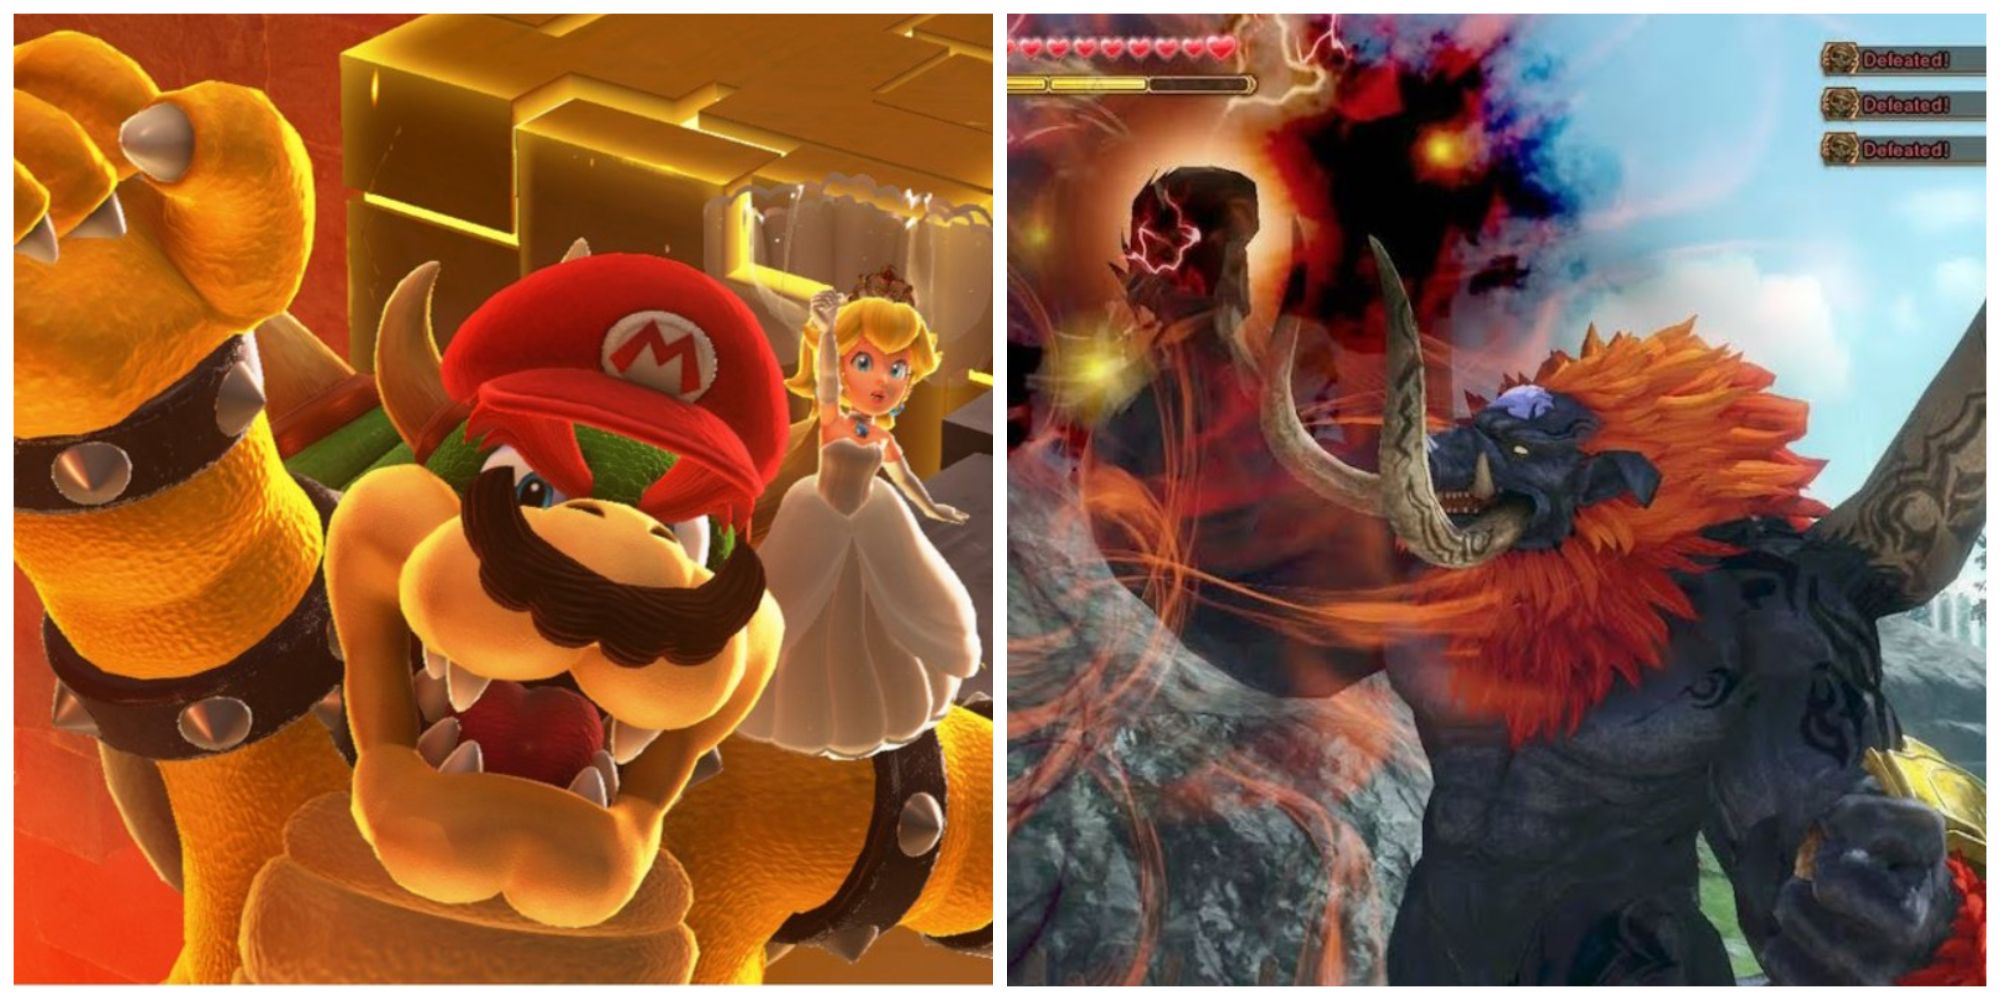 Mario Bowser in Super Mario Odyssey, Ganon in Hyrule Warriors